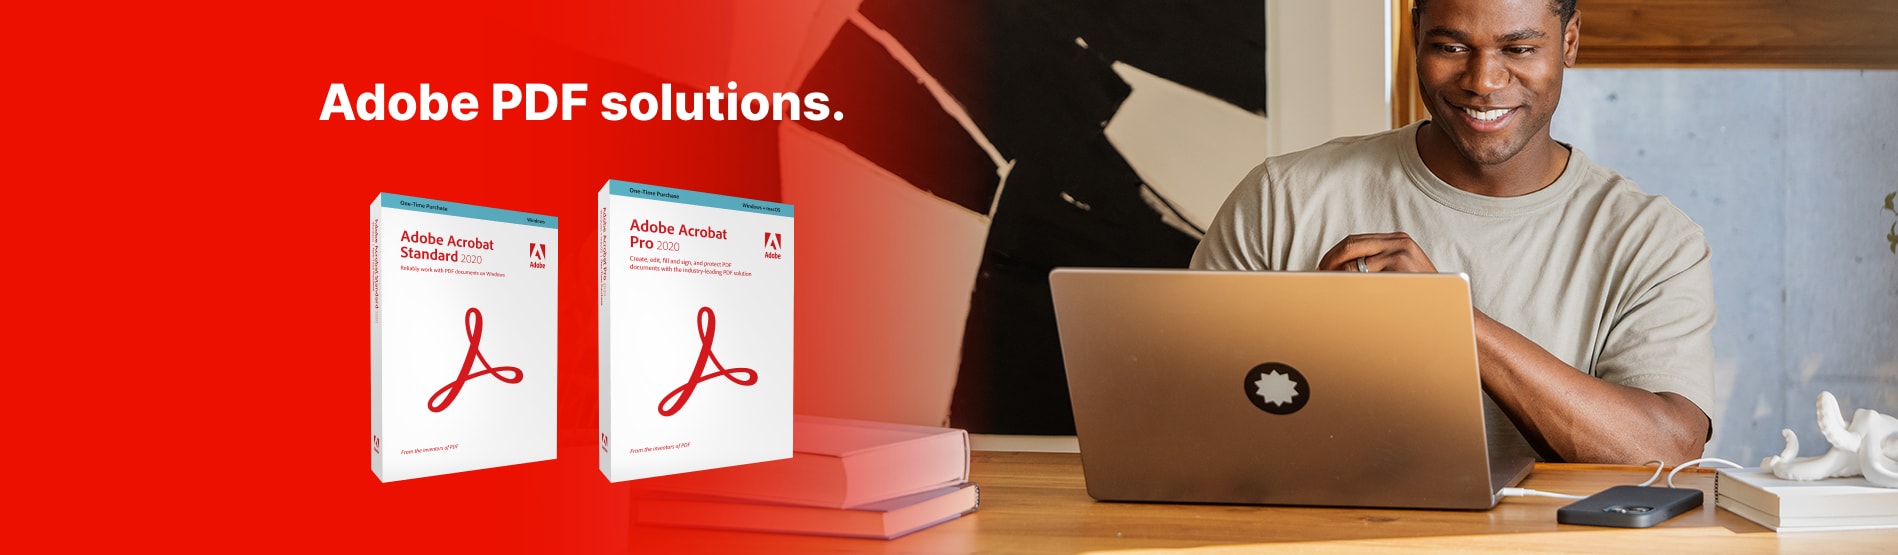 Adobe PDF solutions.